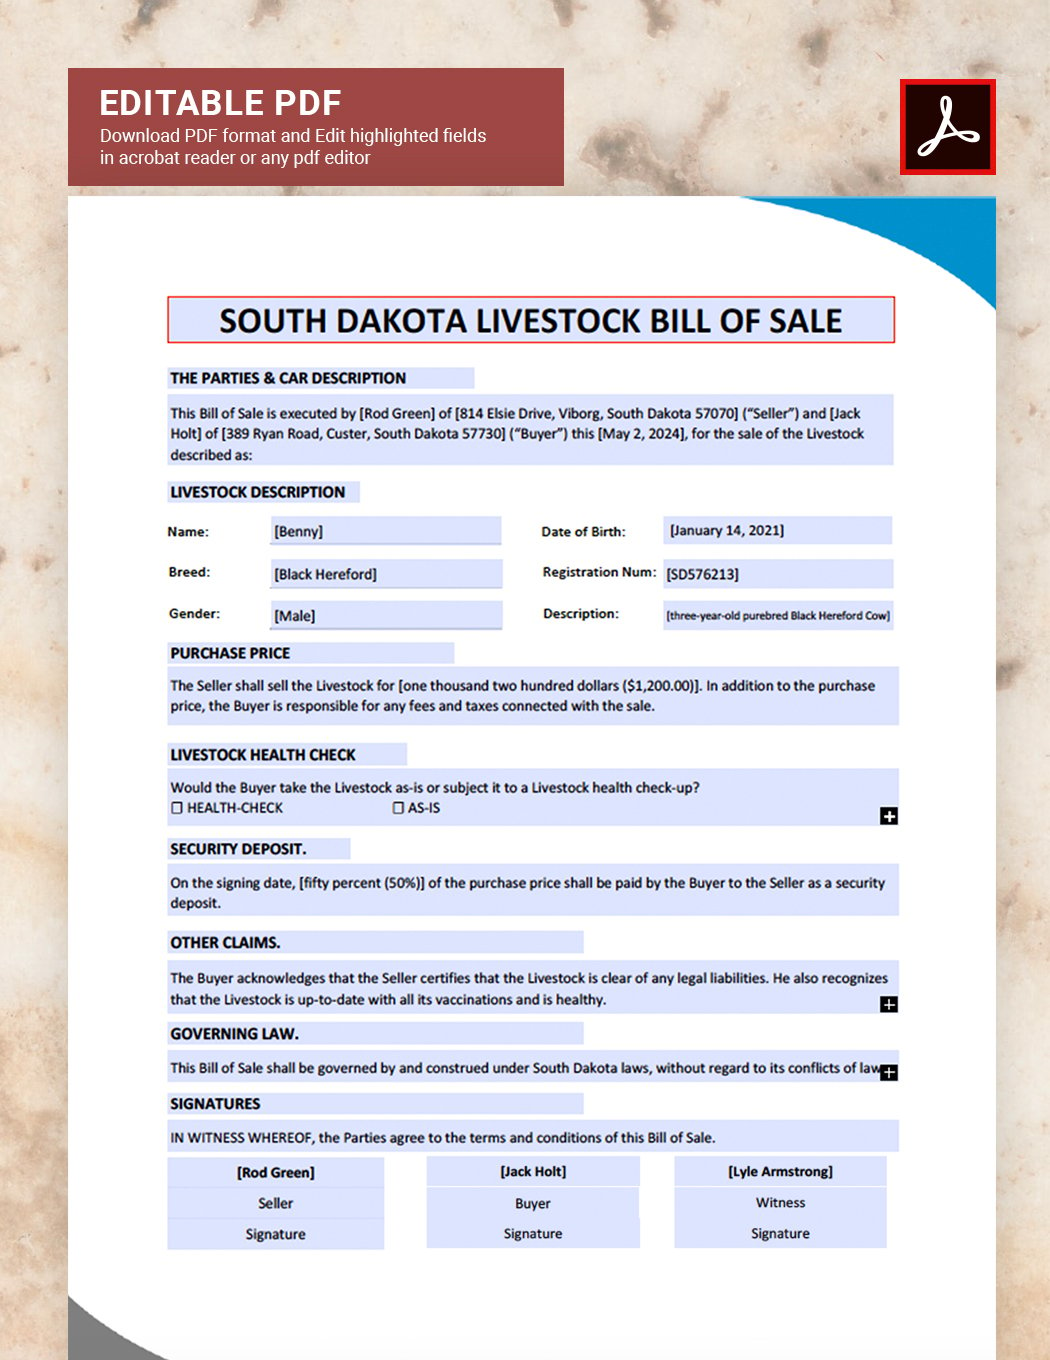 South Dakota Livestock Bill of Sale Form Template